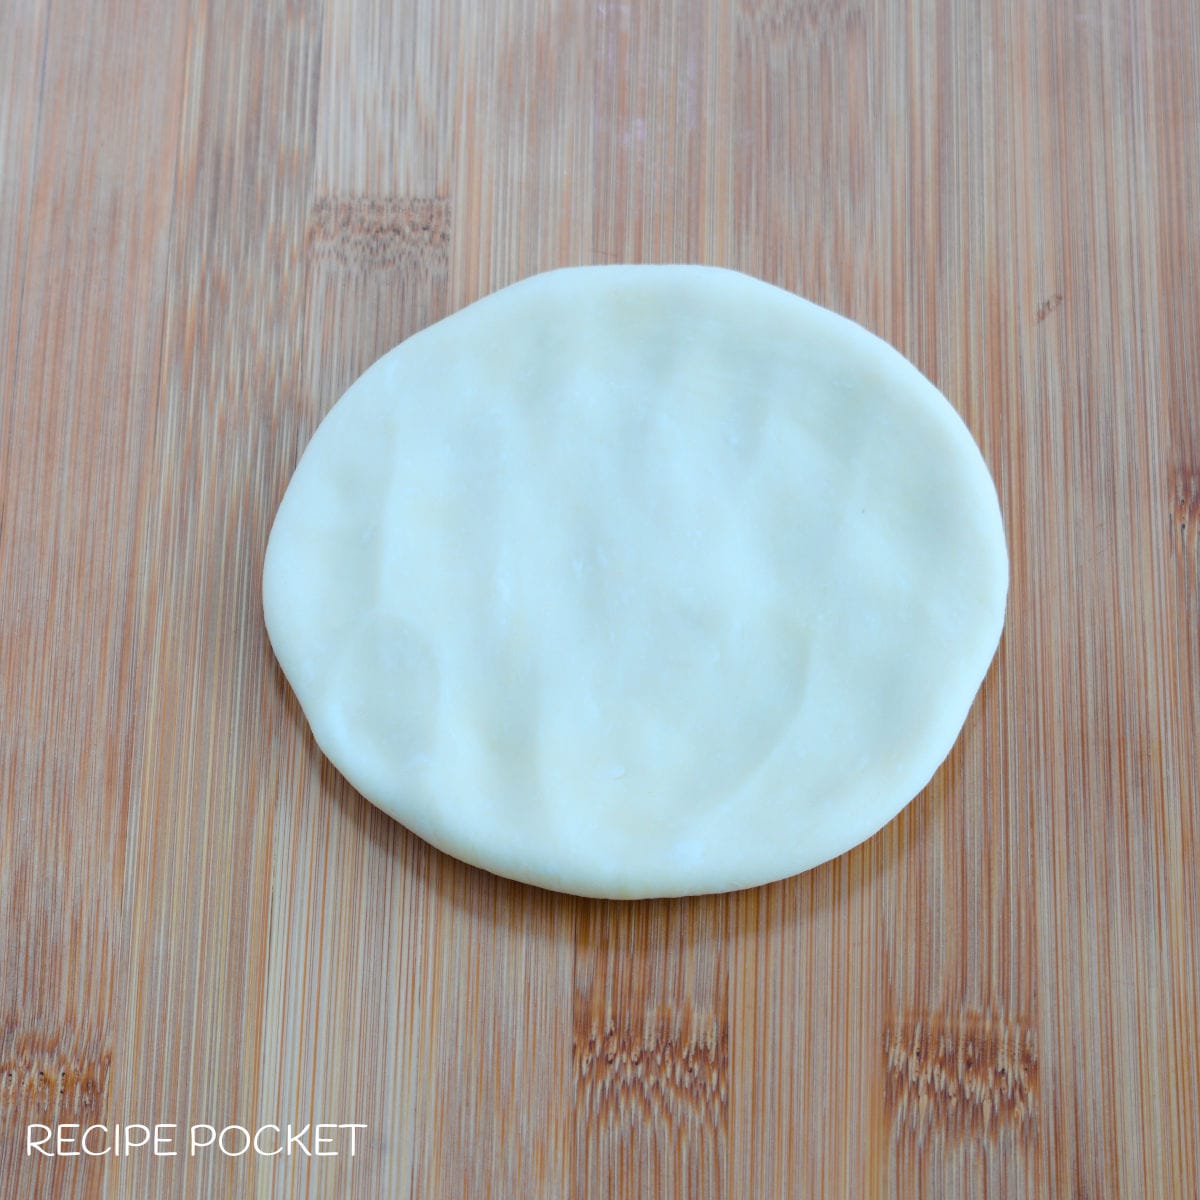 Dough flattened into a circle.